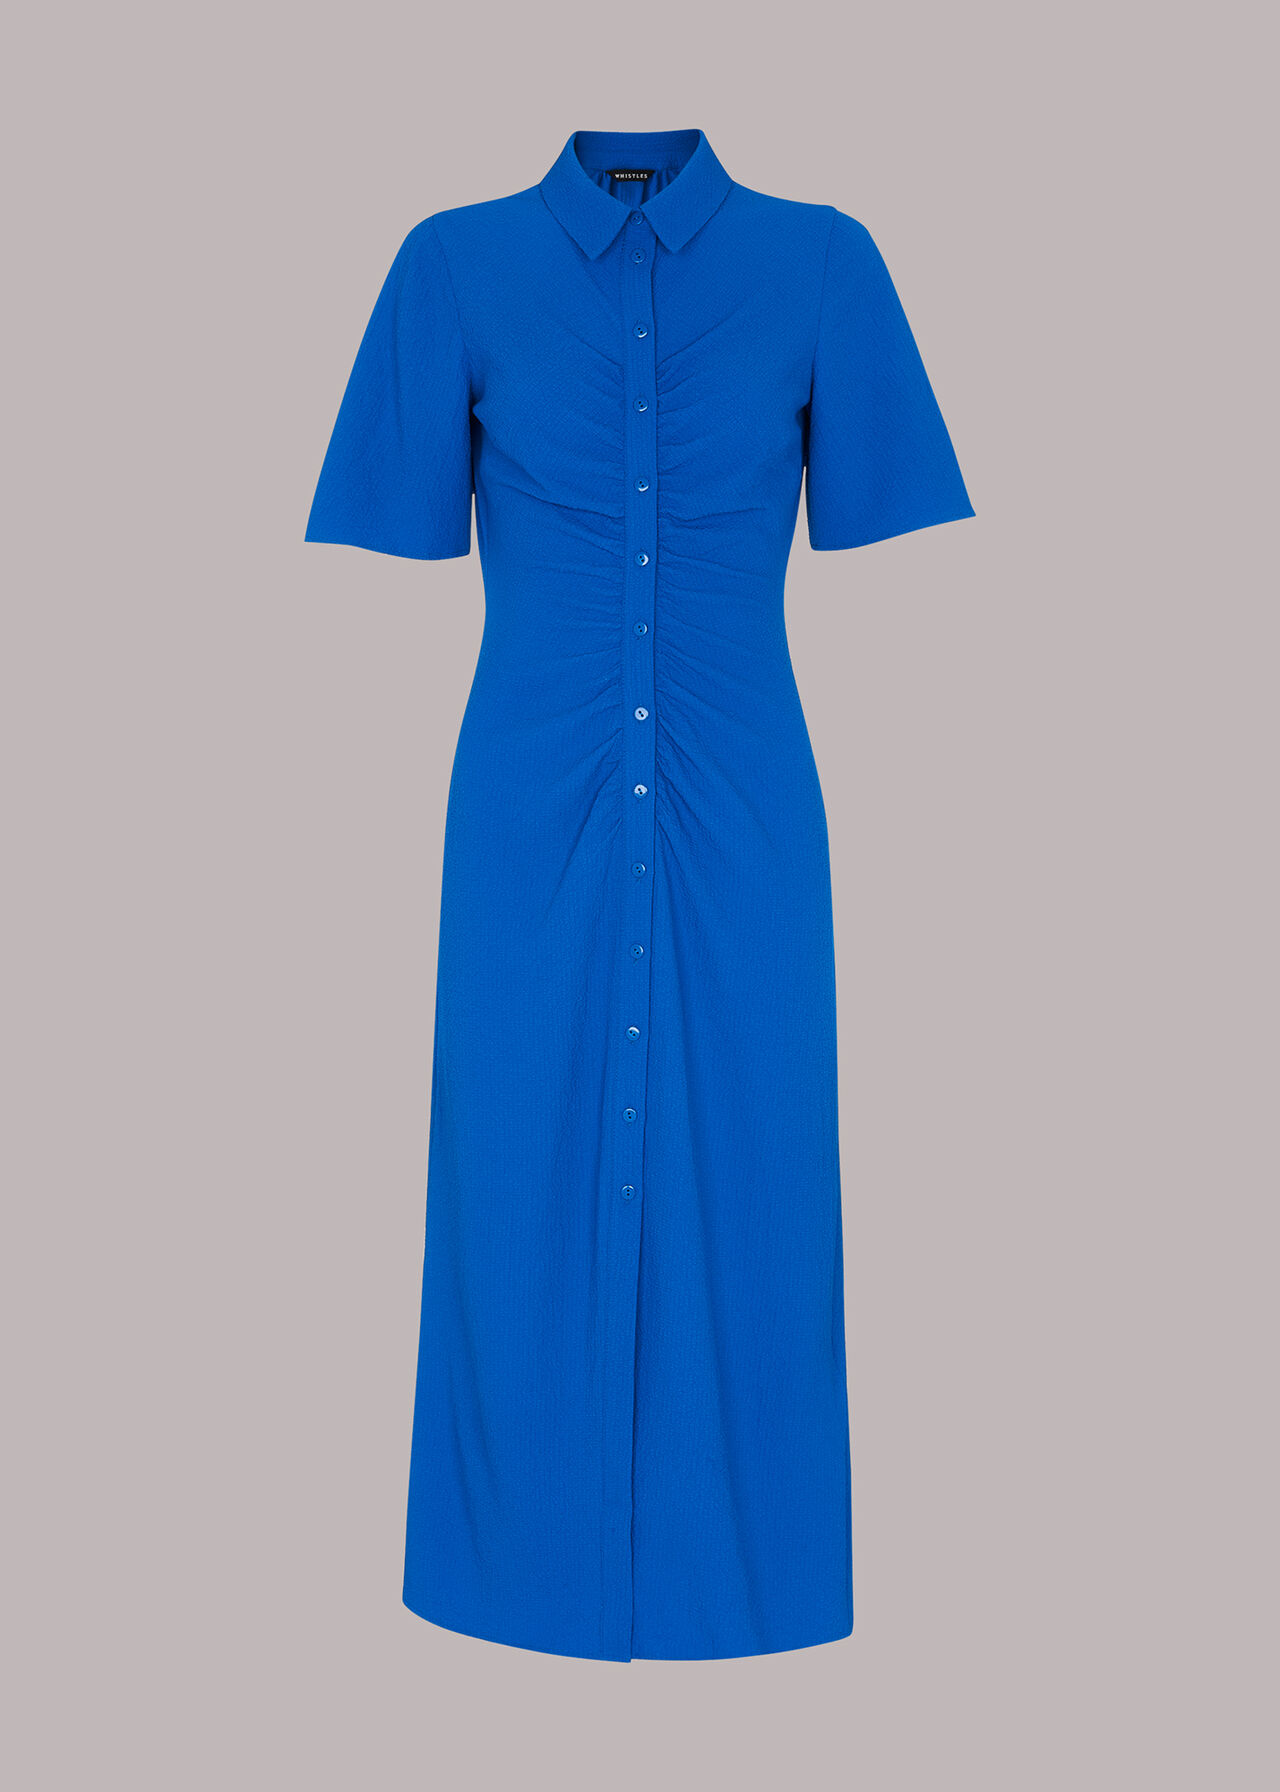 Blue Textured Gathered Detail Dress | WHISTLES